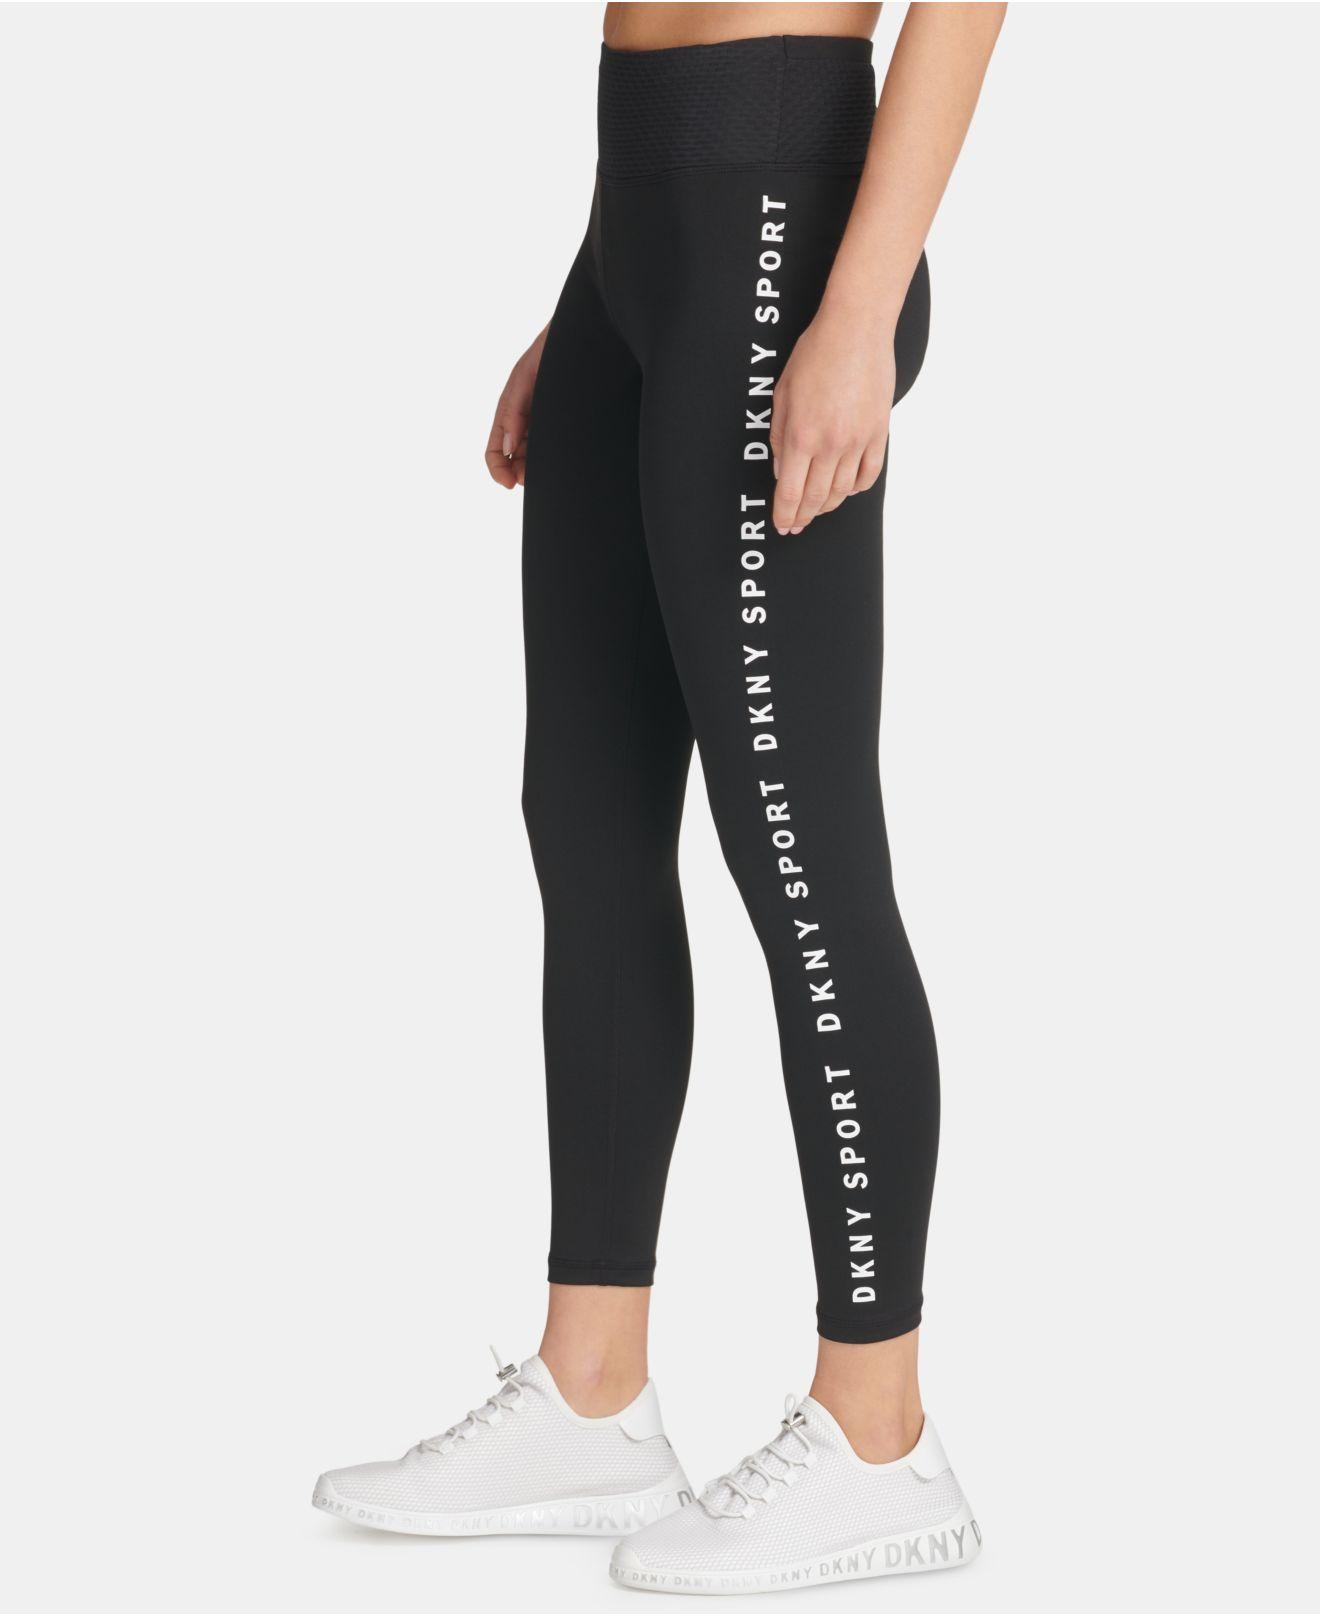 Buy DKNY Girls' Pants Set - 2 Piece Short Sleeve T-Shirt and Leggings Kids  Clothing Set, White/Sea Pink, 10 at Amazon.in